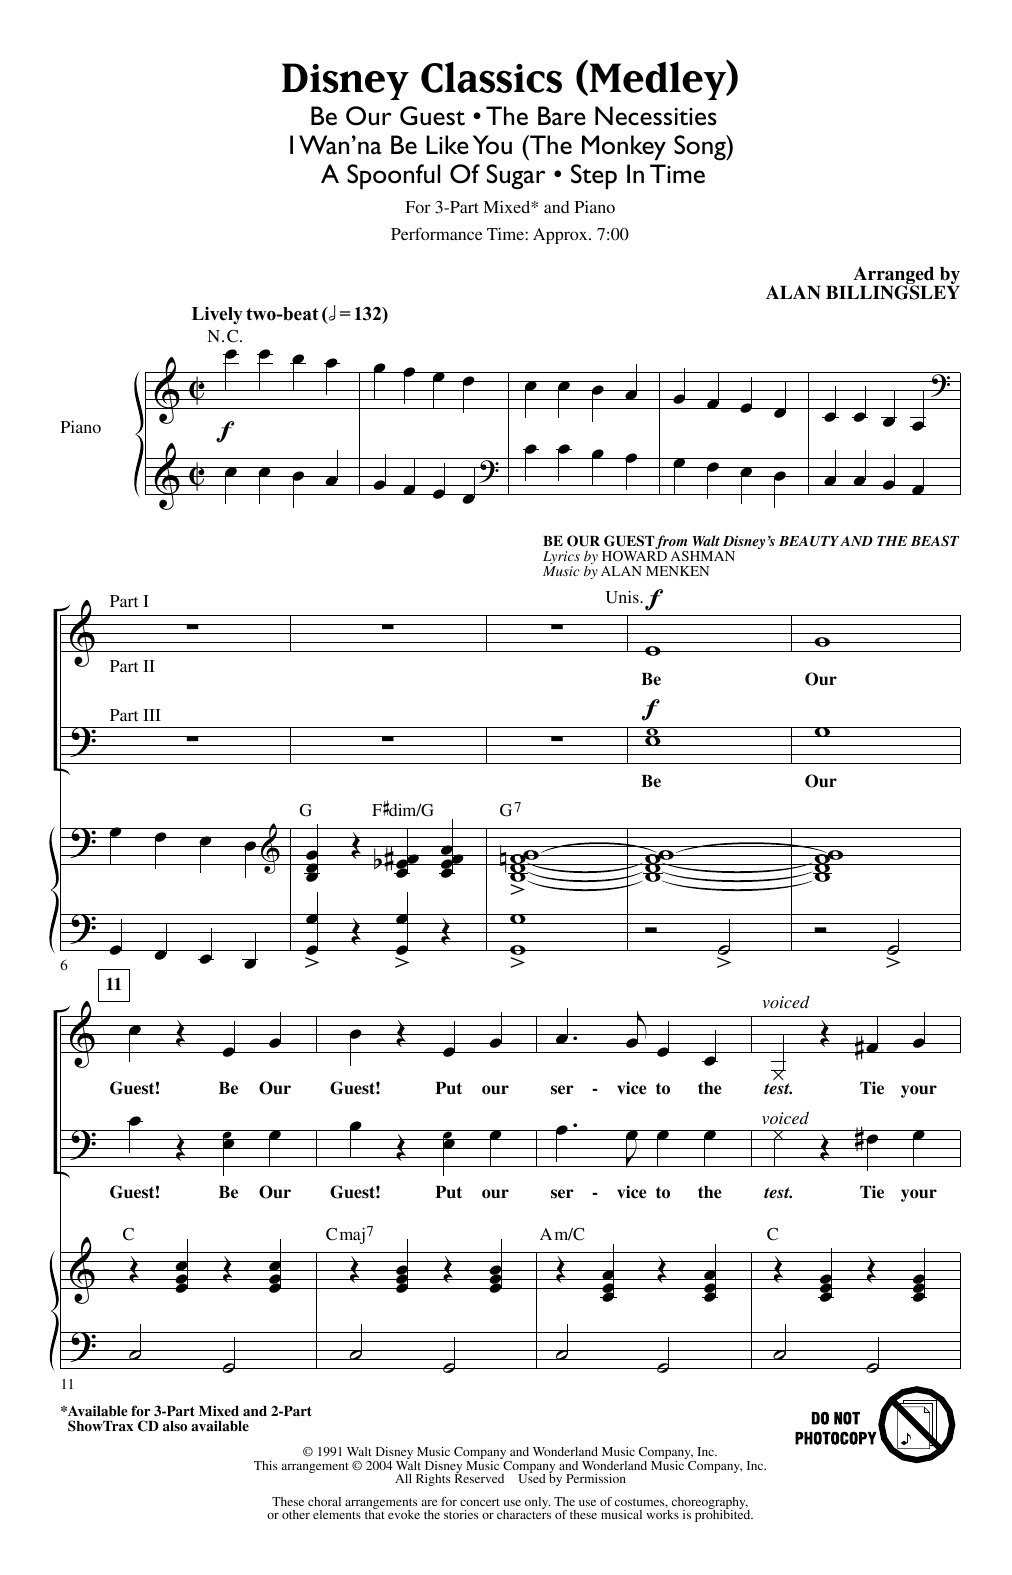 Alan Billingsley Disney Classics (Medley) Sheet Music Notes & Chords for 3-Part Mixed Choir - Download or Print PDF